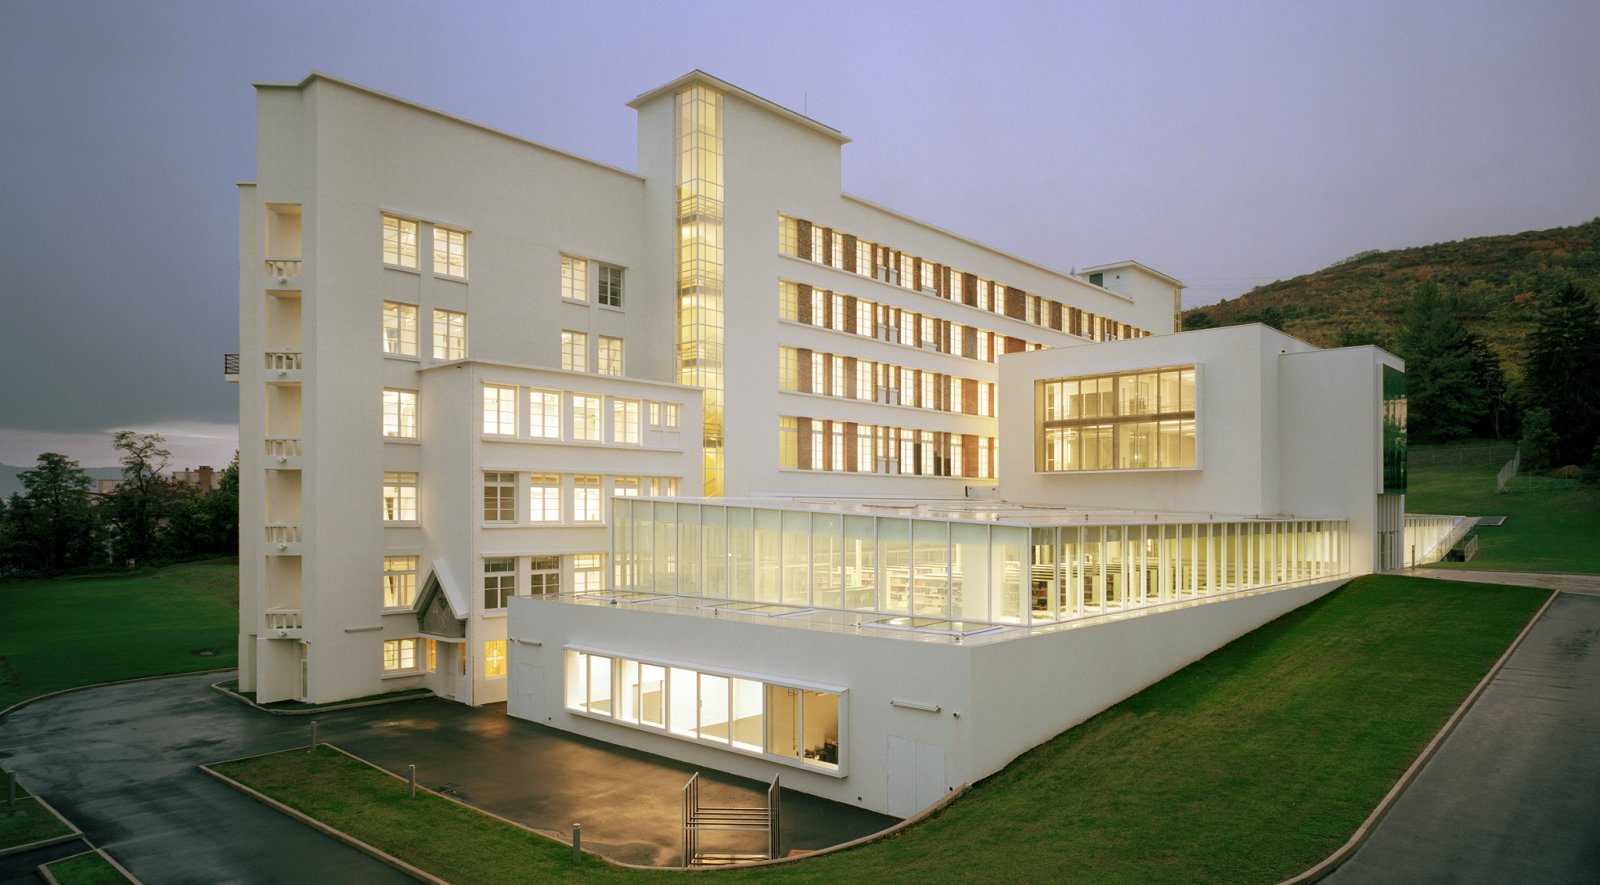 Clermont-Ferrand School of Architecture